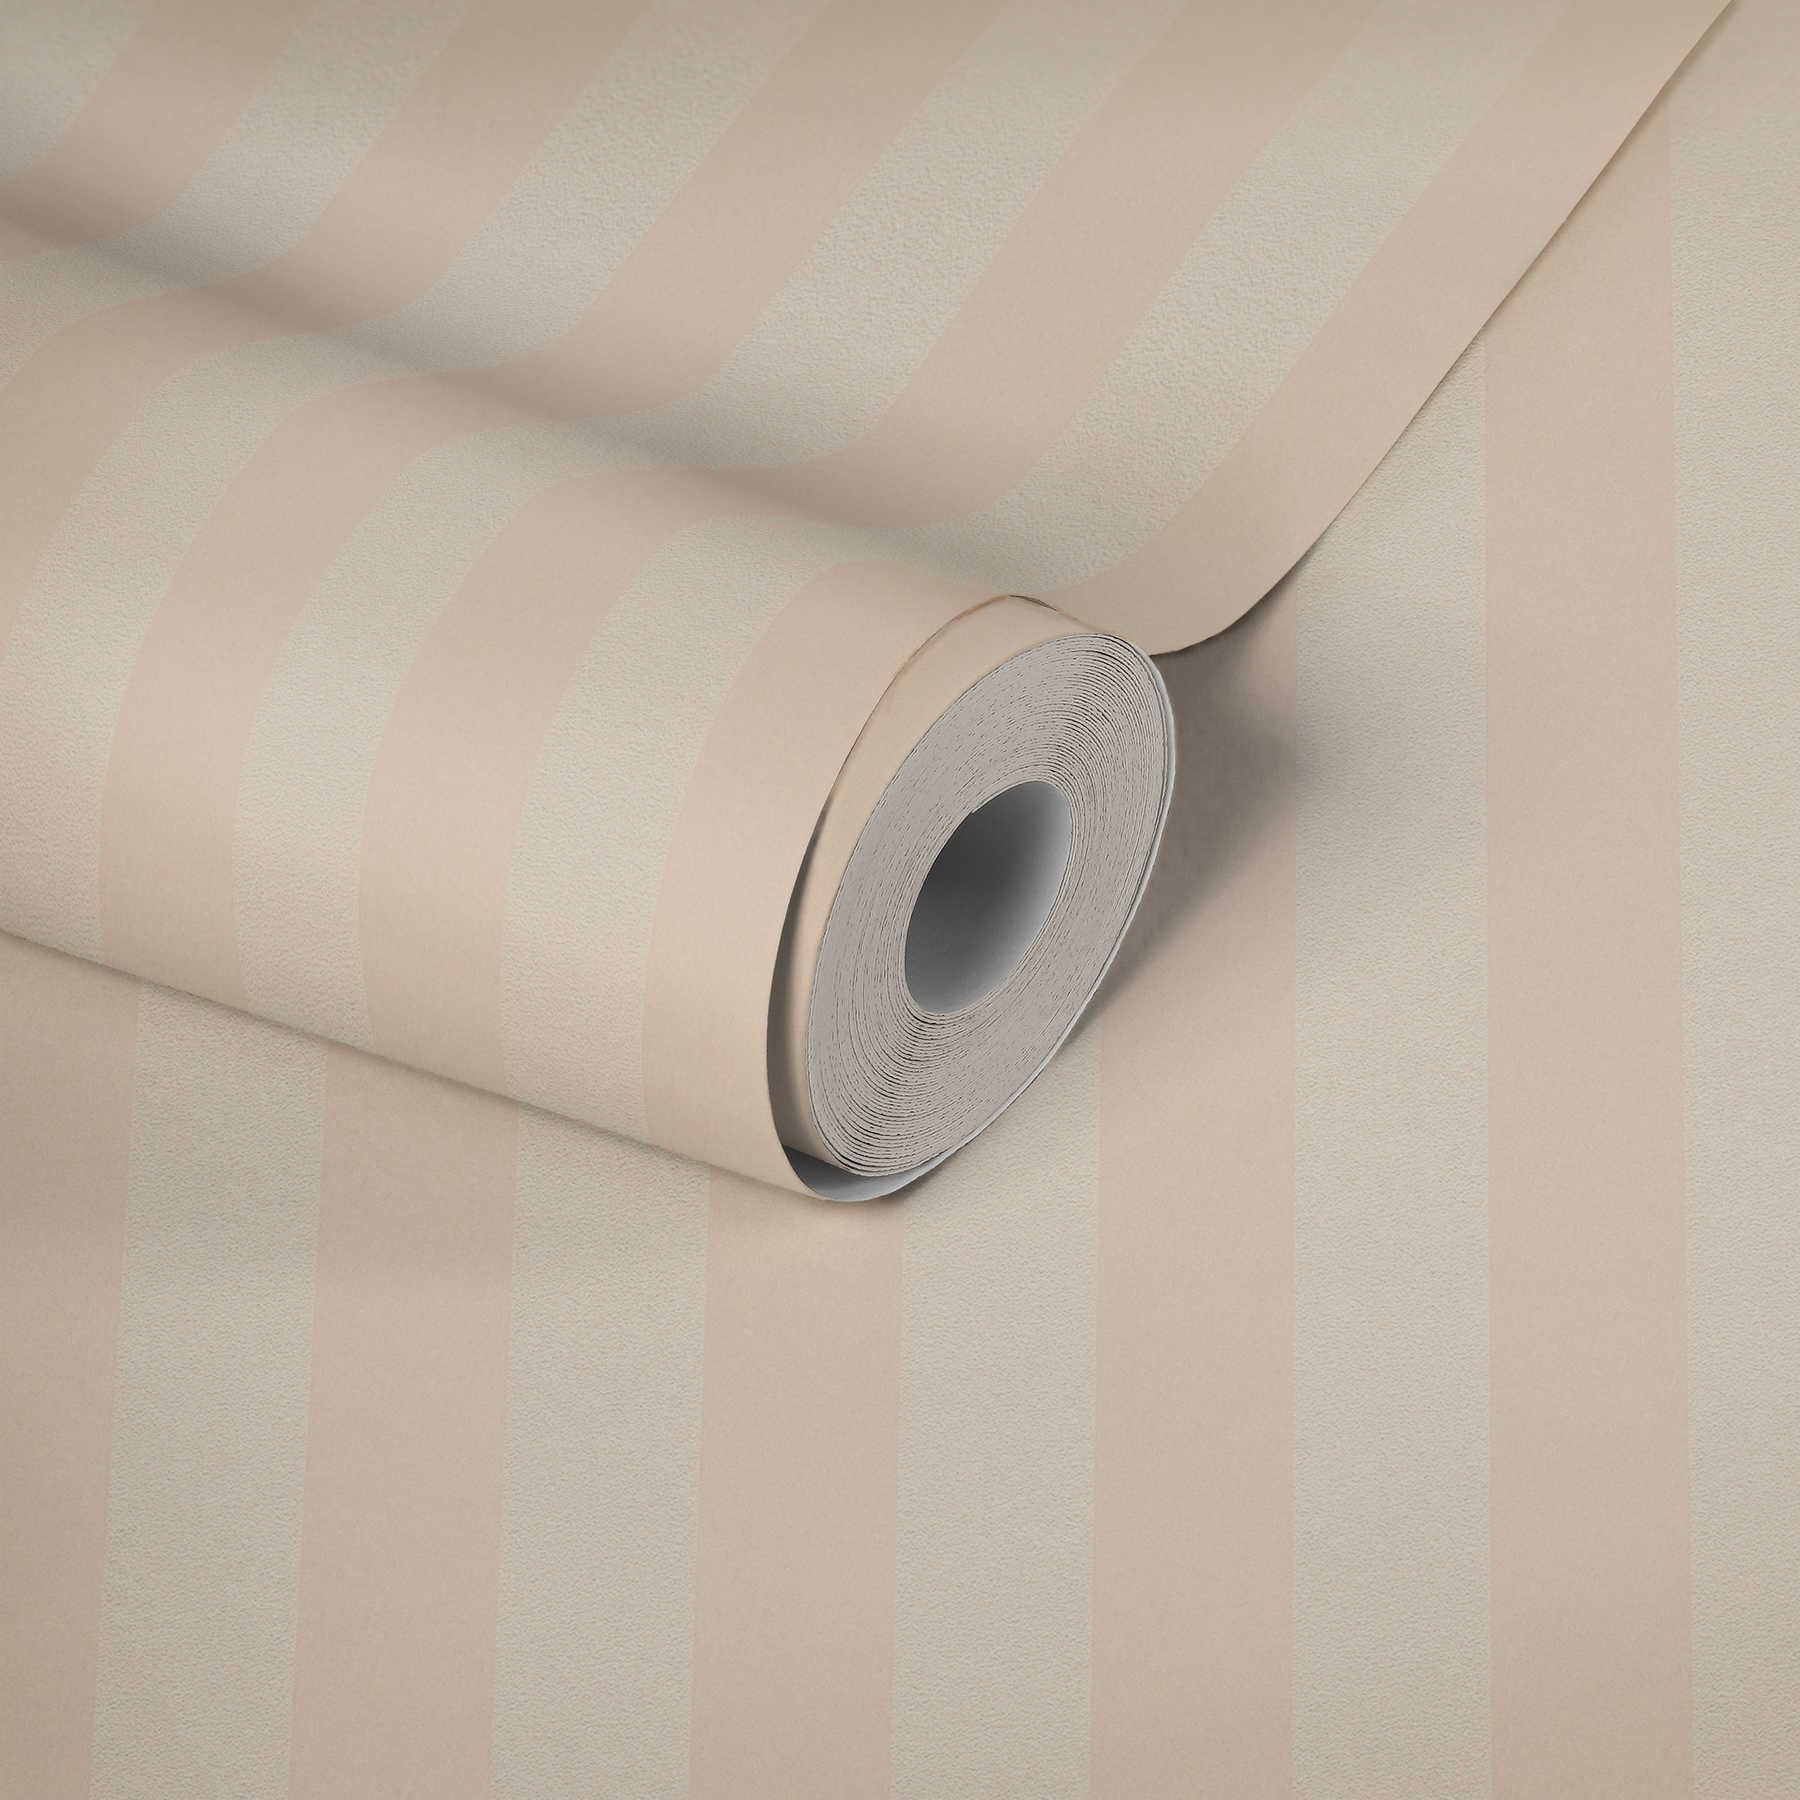             Striped wallpaper classic romantic design - pink
        